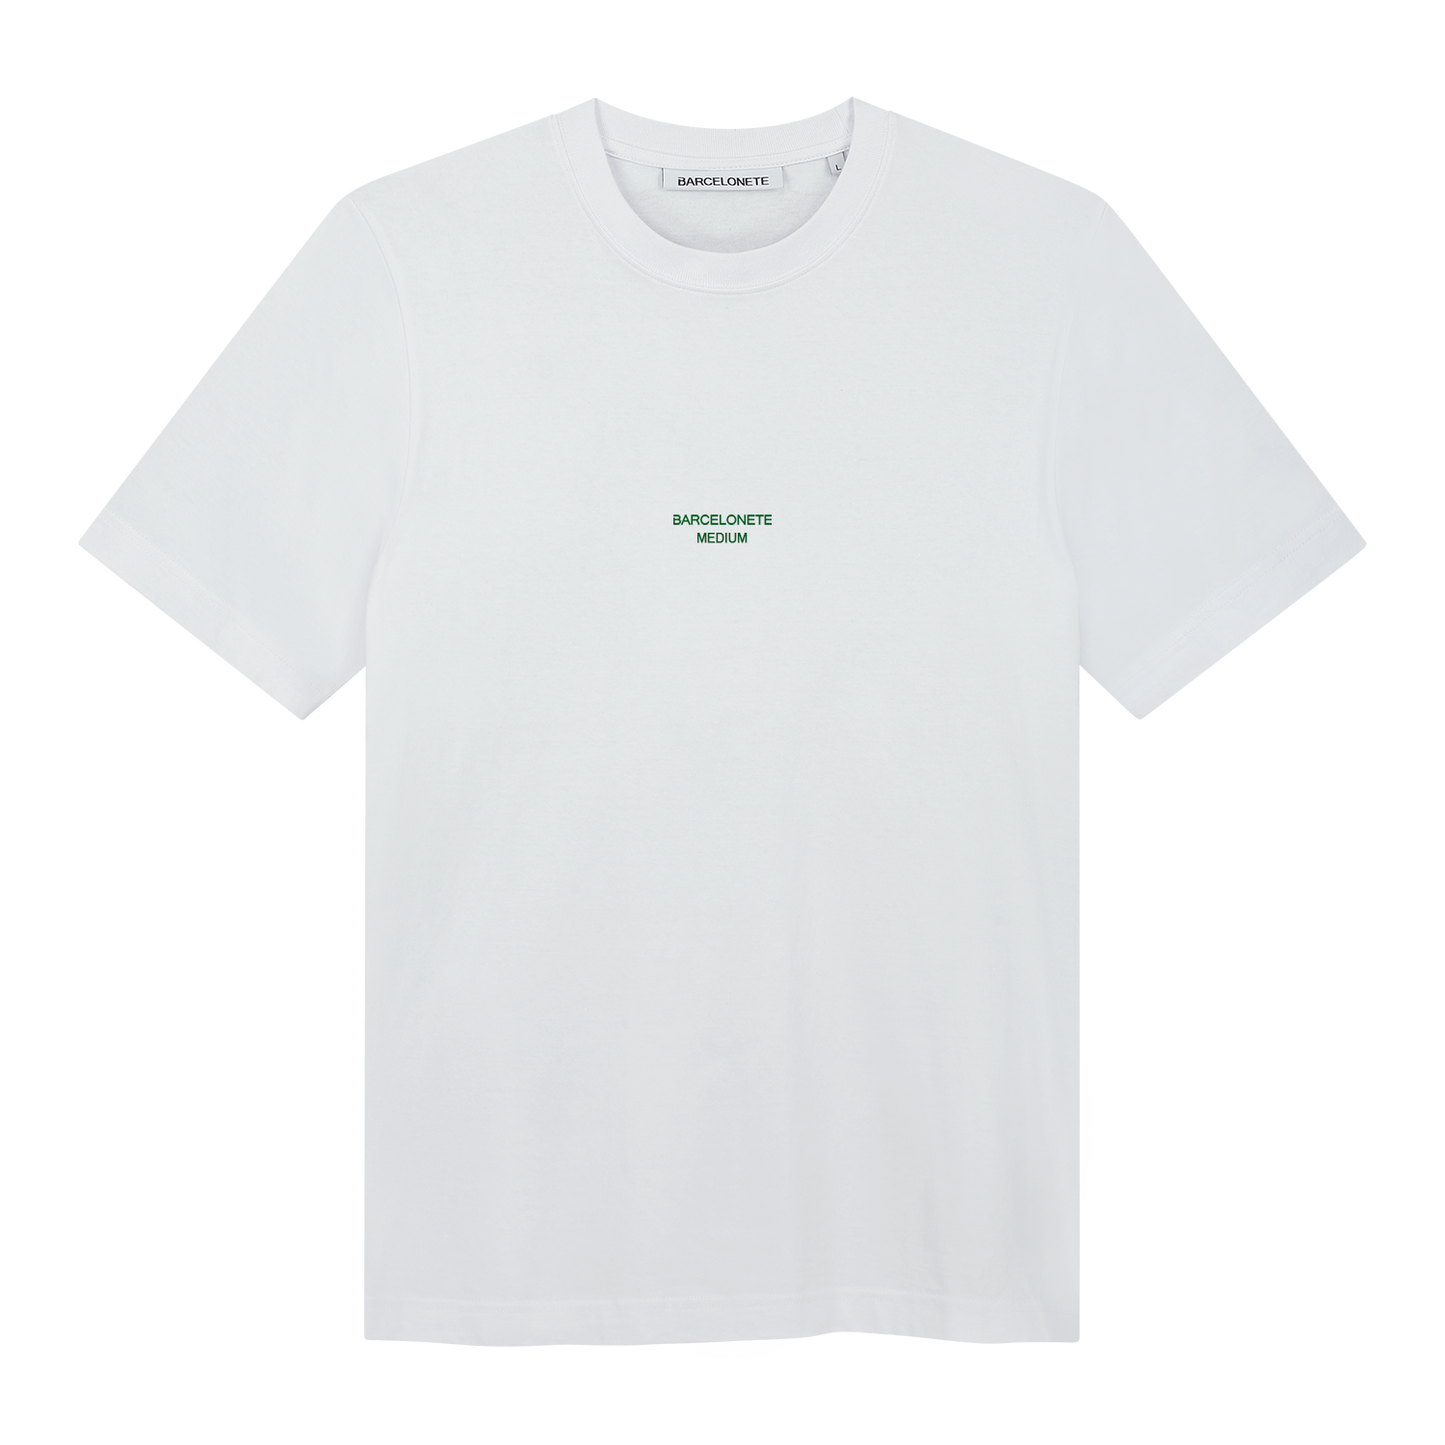 Size Medium T-Shirt